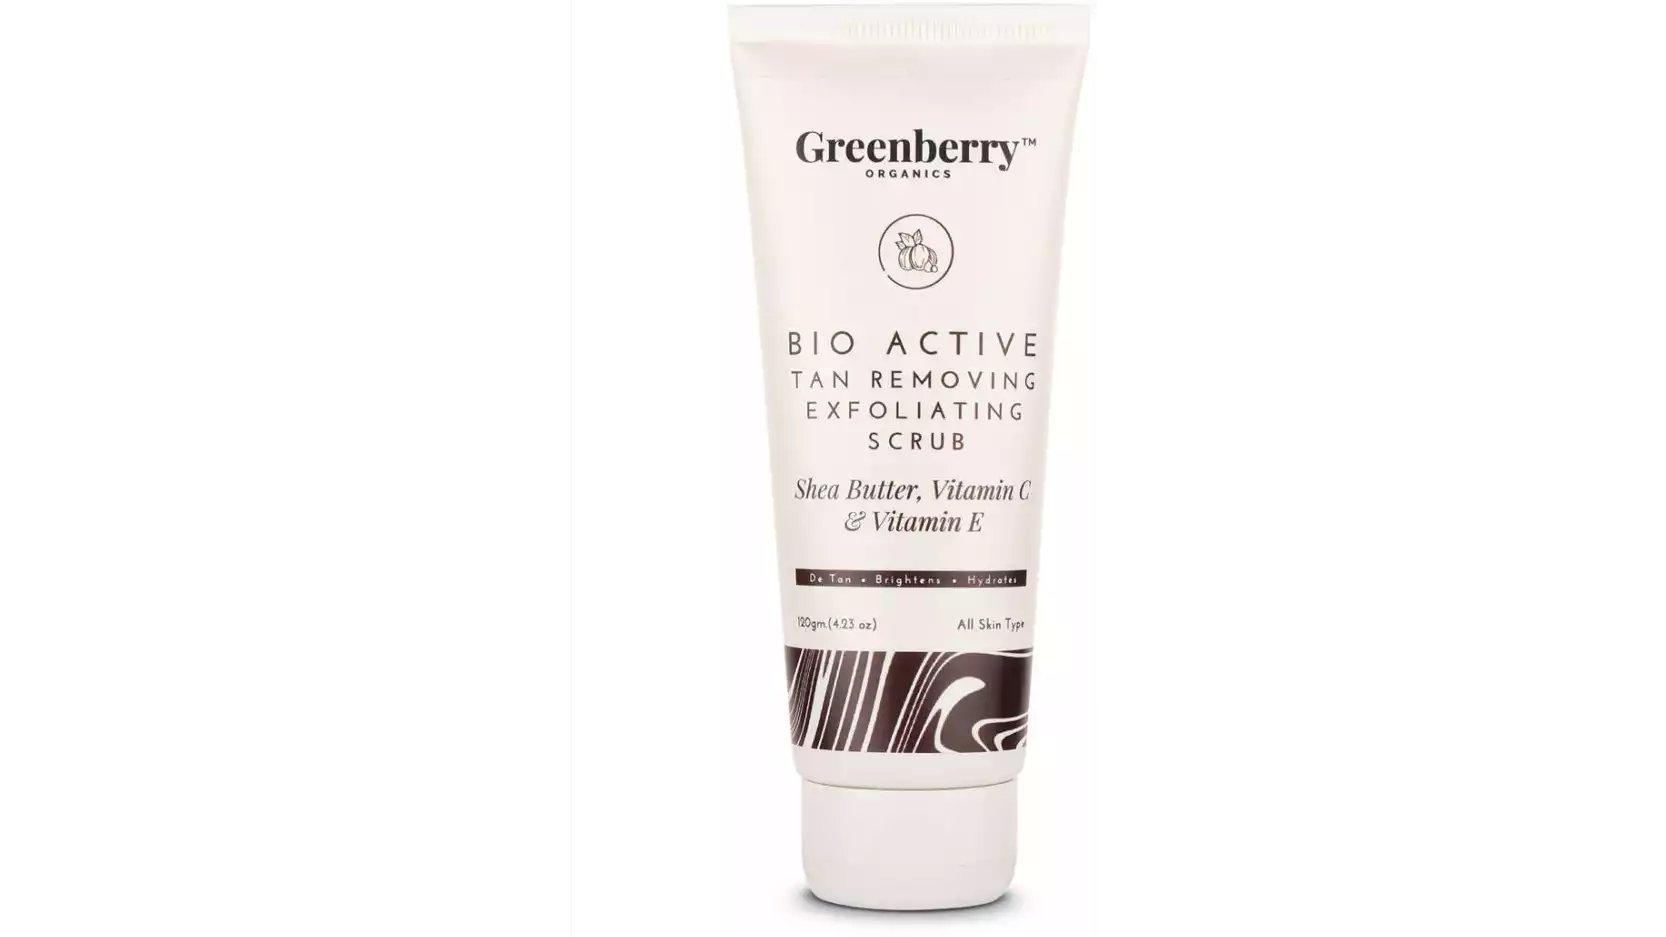 Greenberry Organics Bio Active Tan Removing Exfoliating Scrub (120g)